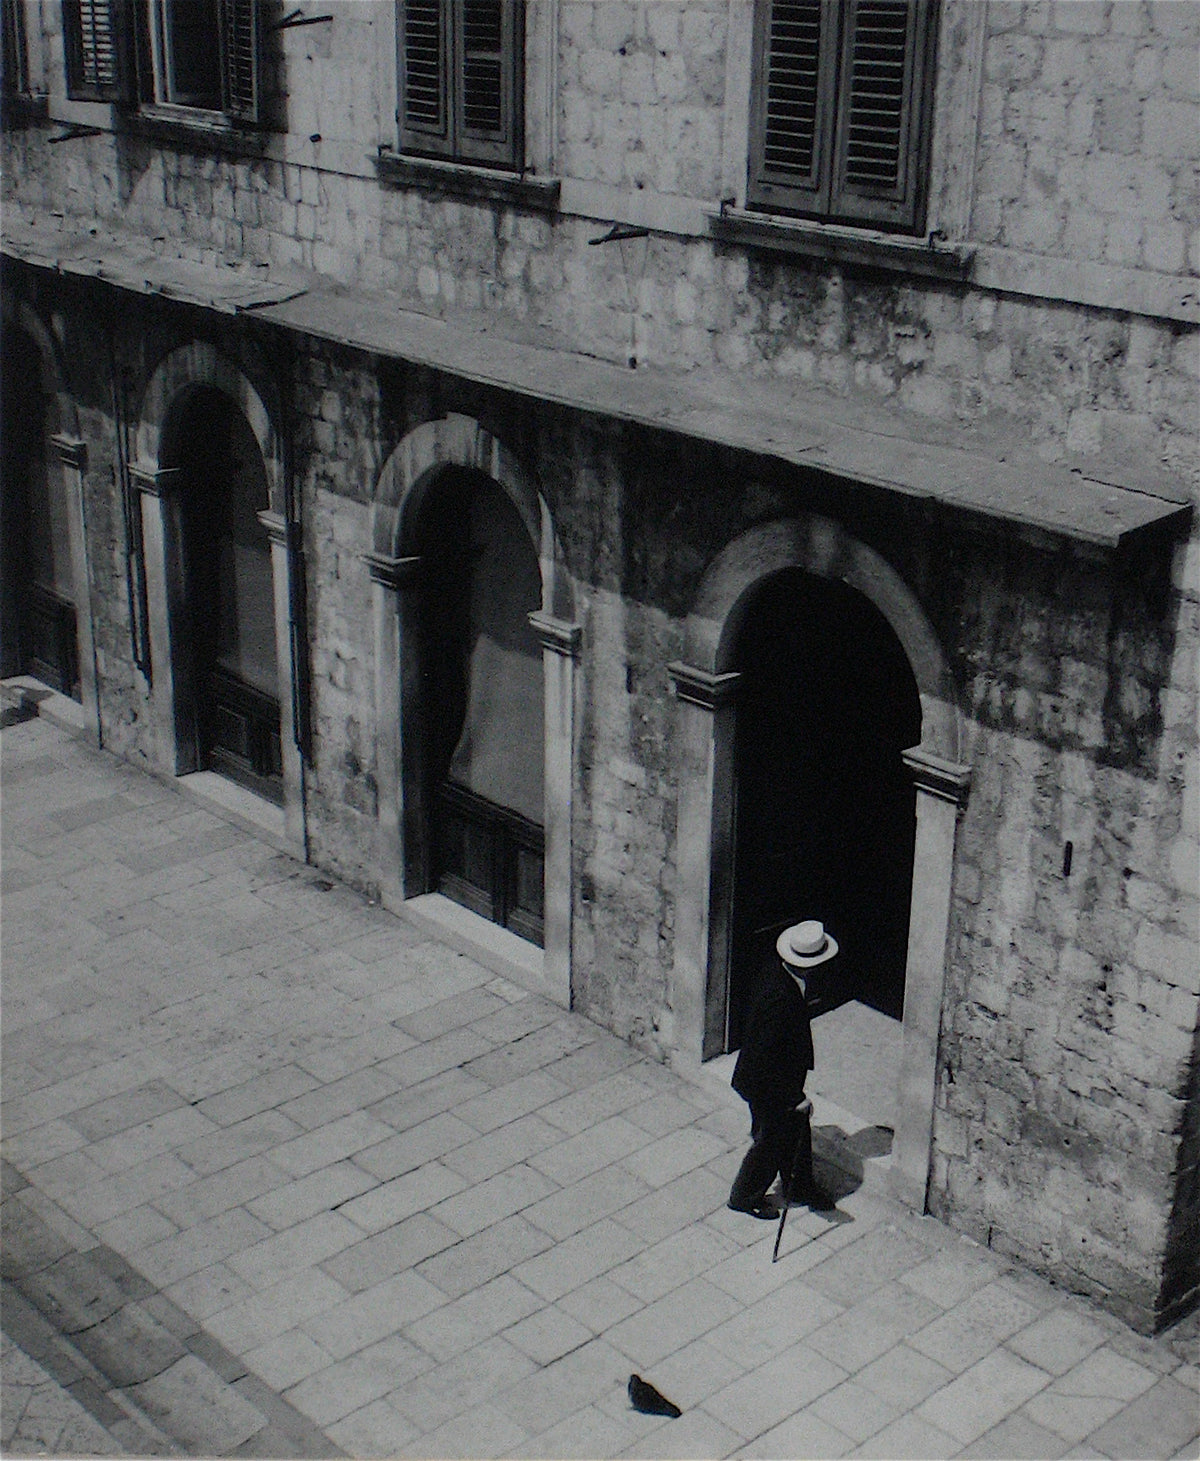 Man in Doorway - Dubrovnik, Yugoslavia&lt;br&gt;1960s Silver Gelatin Print&lt;br&gt;&lt;br&gt;#12174